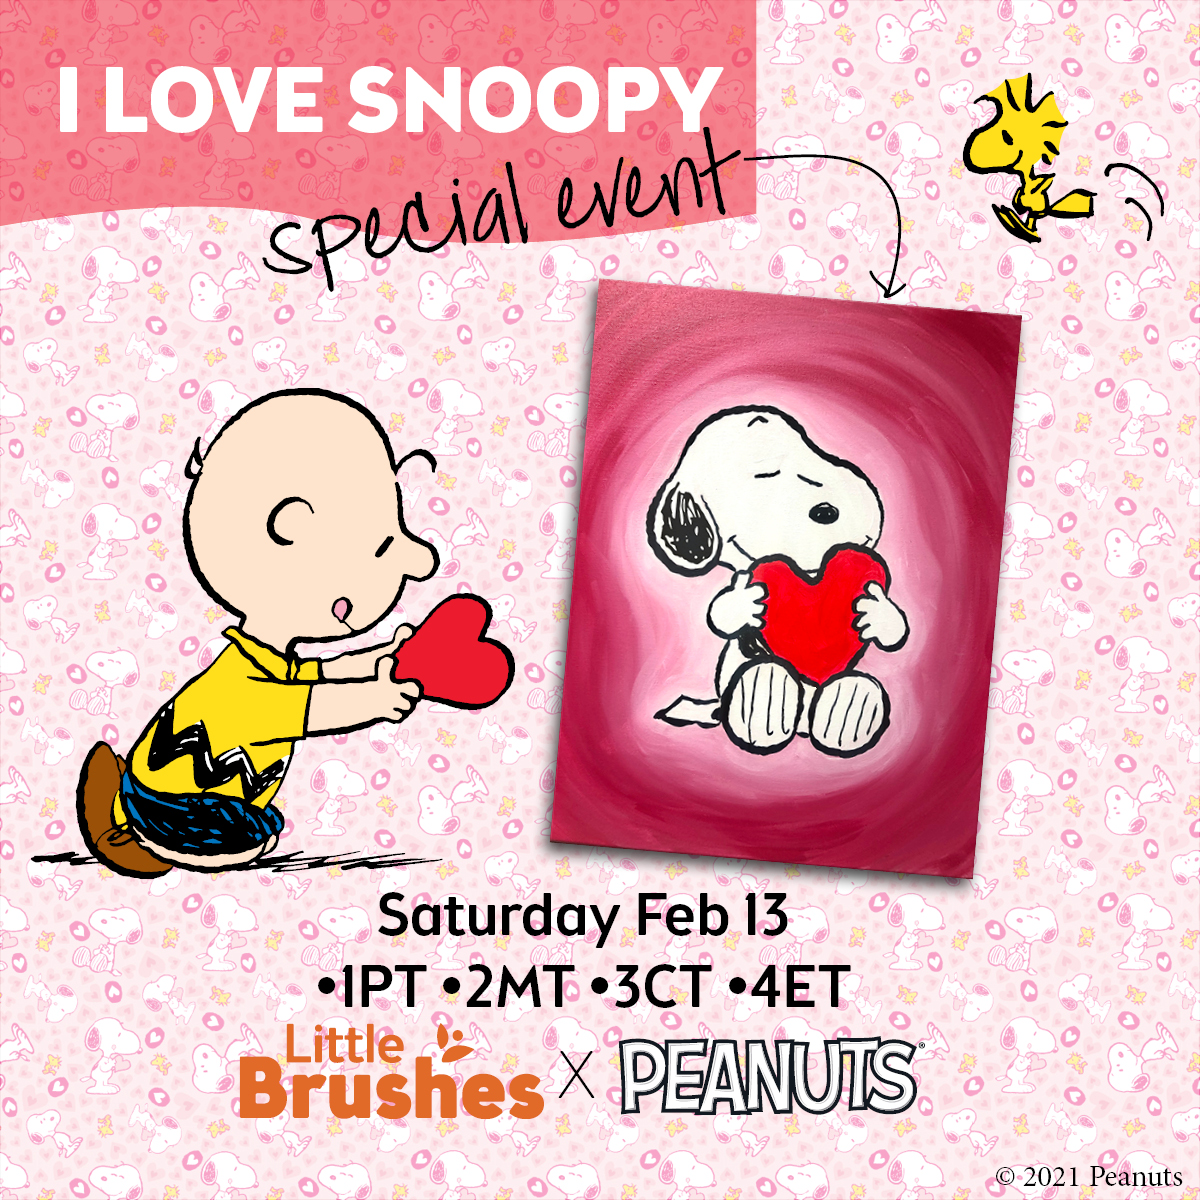 We Love Snoopy!